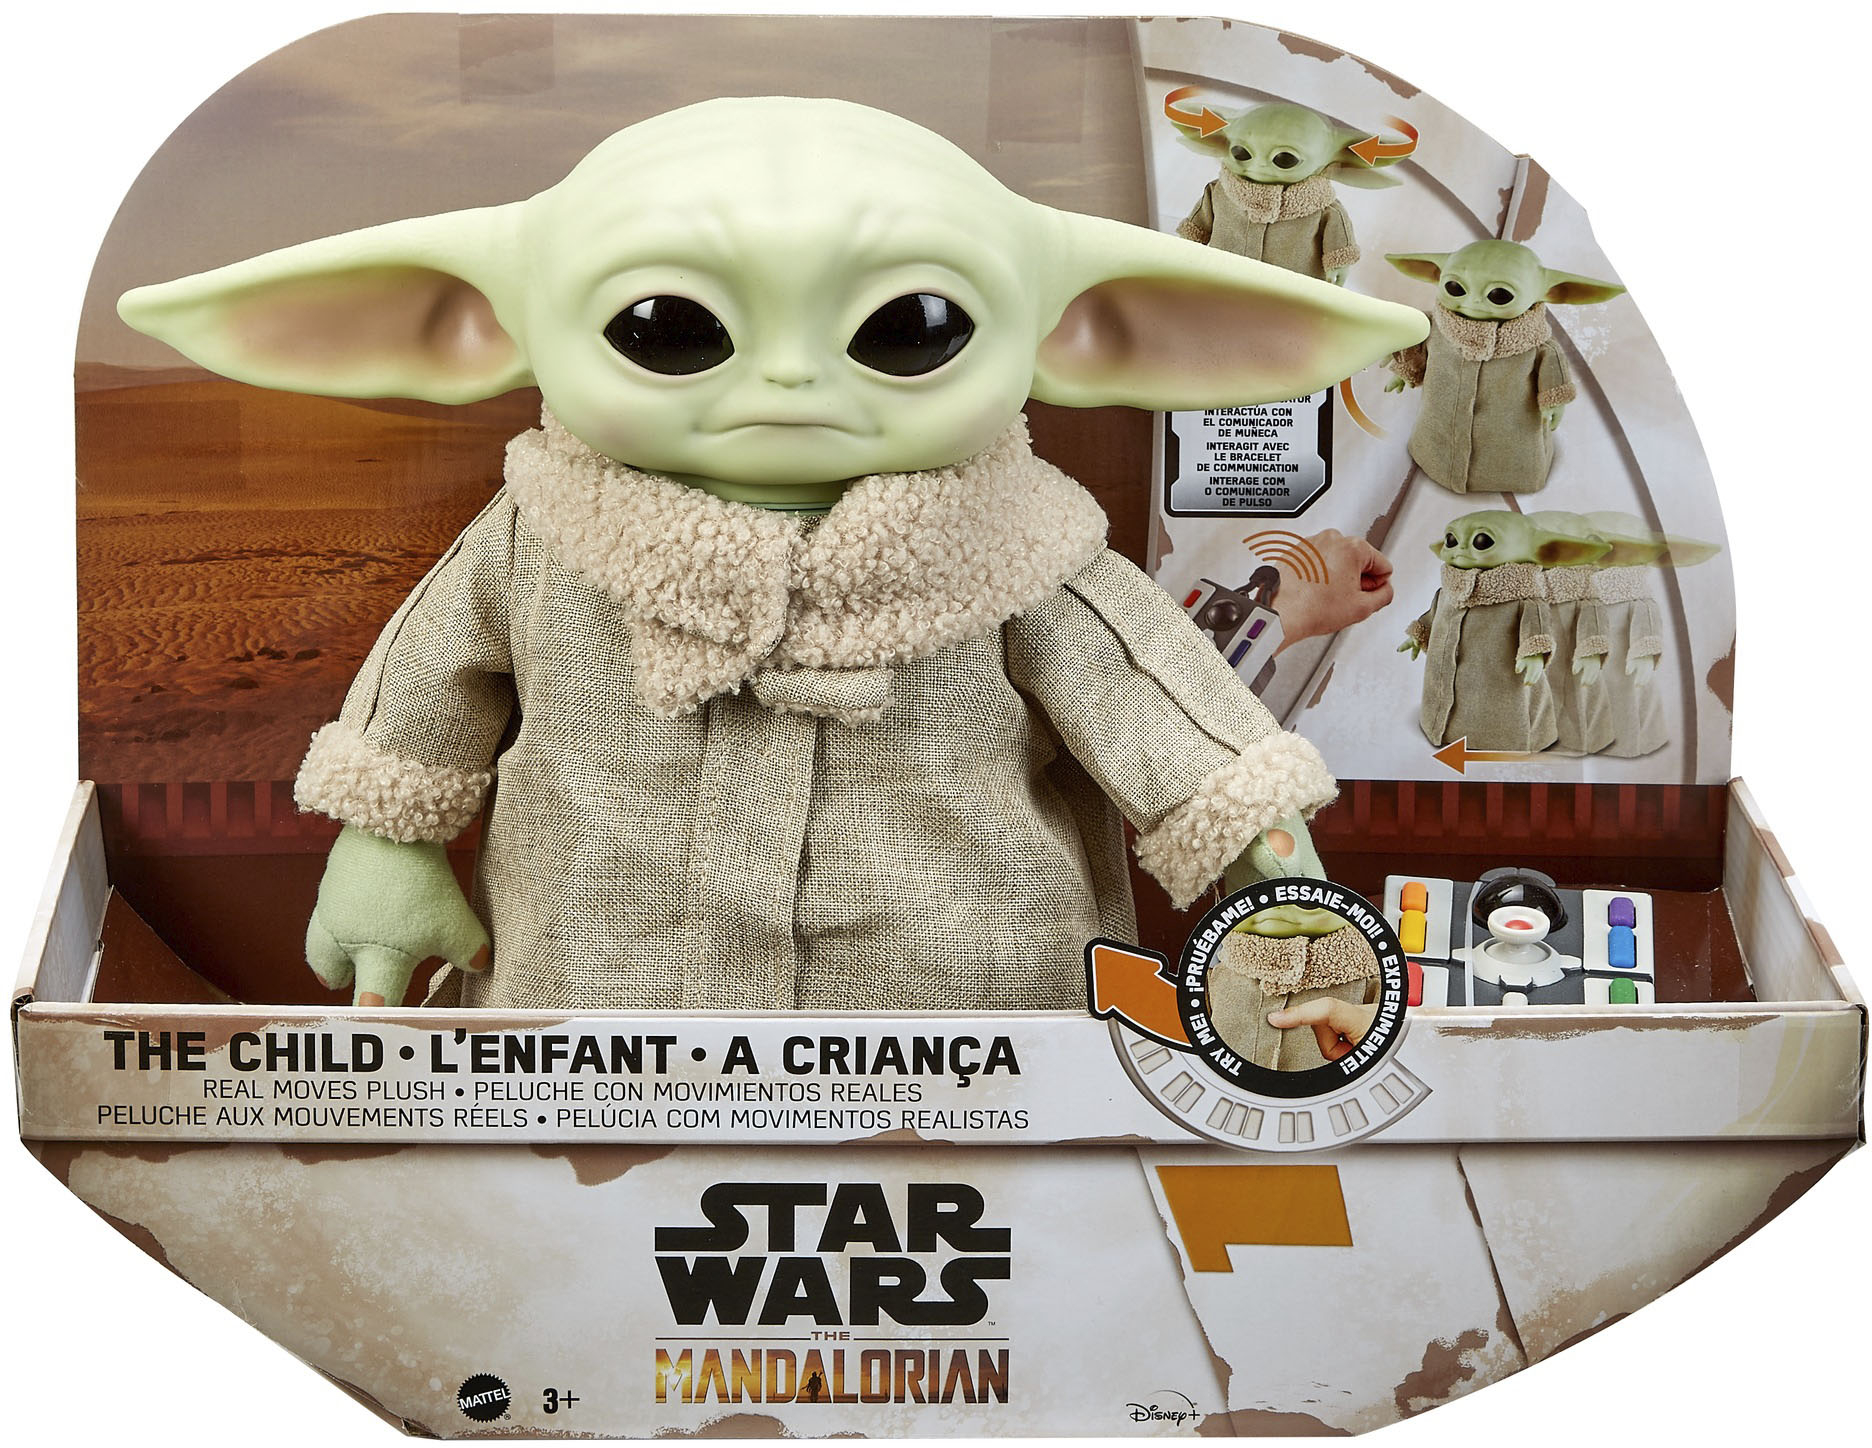 Star Wars Baby Yoda Grogu Mandalorian The Child 8cm Figure Toy Collection  Dolls